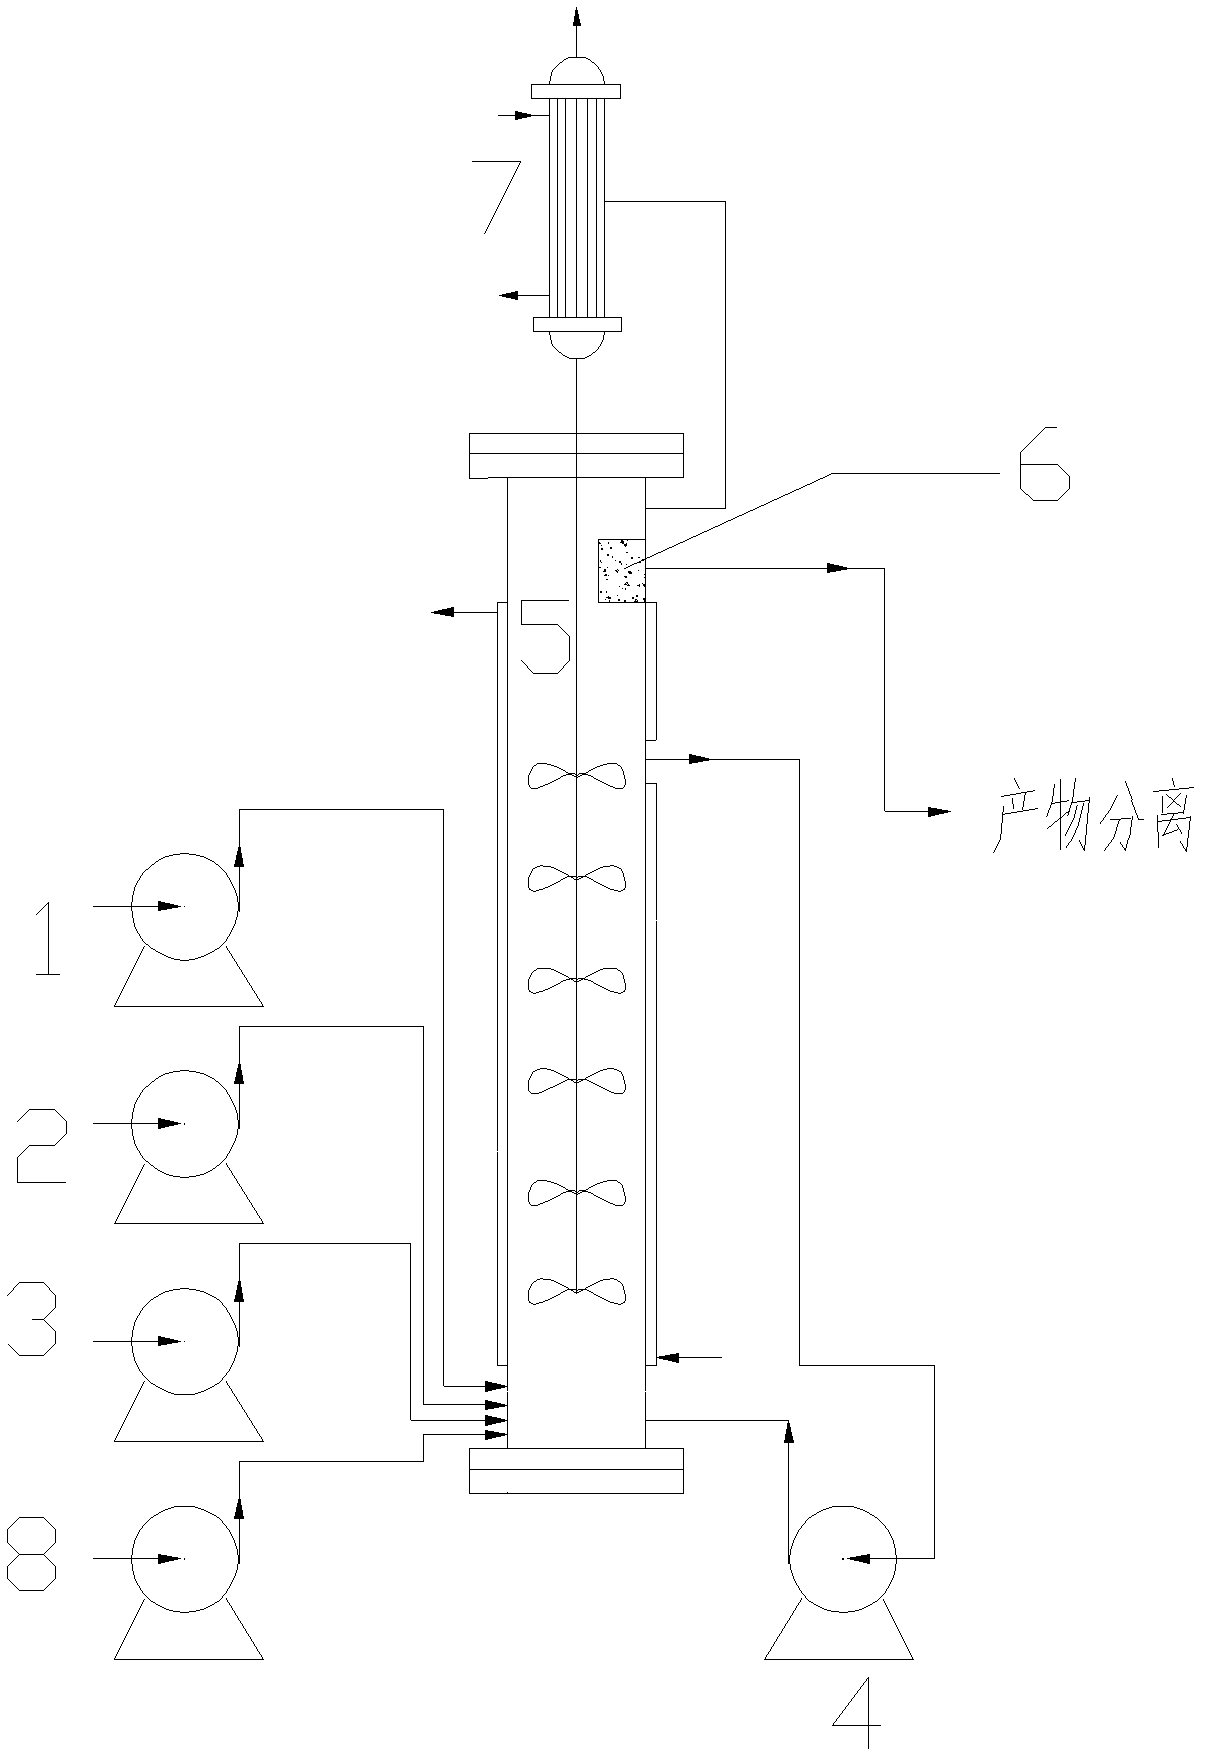 Method of continuously producing epichlorohydrin by directly epoxidizing chloropropene